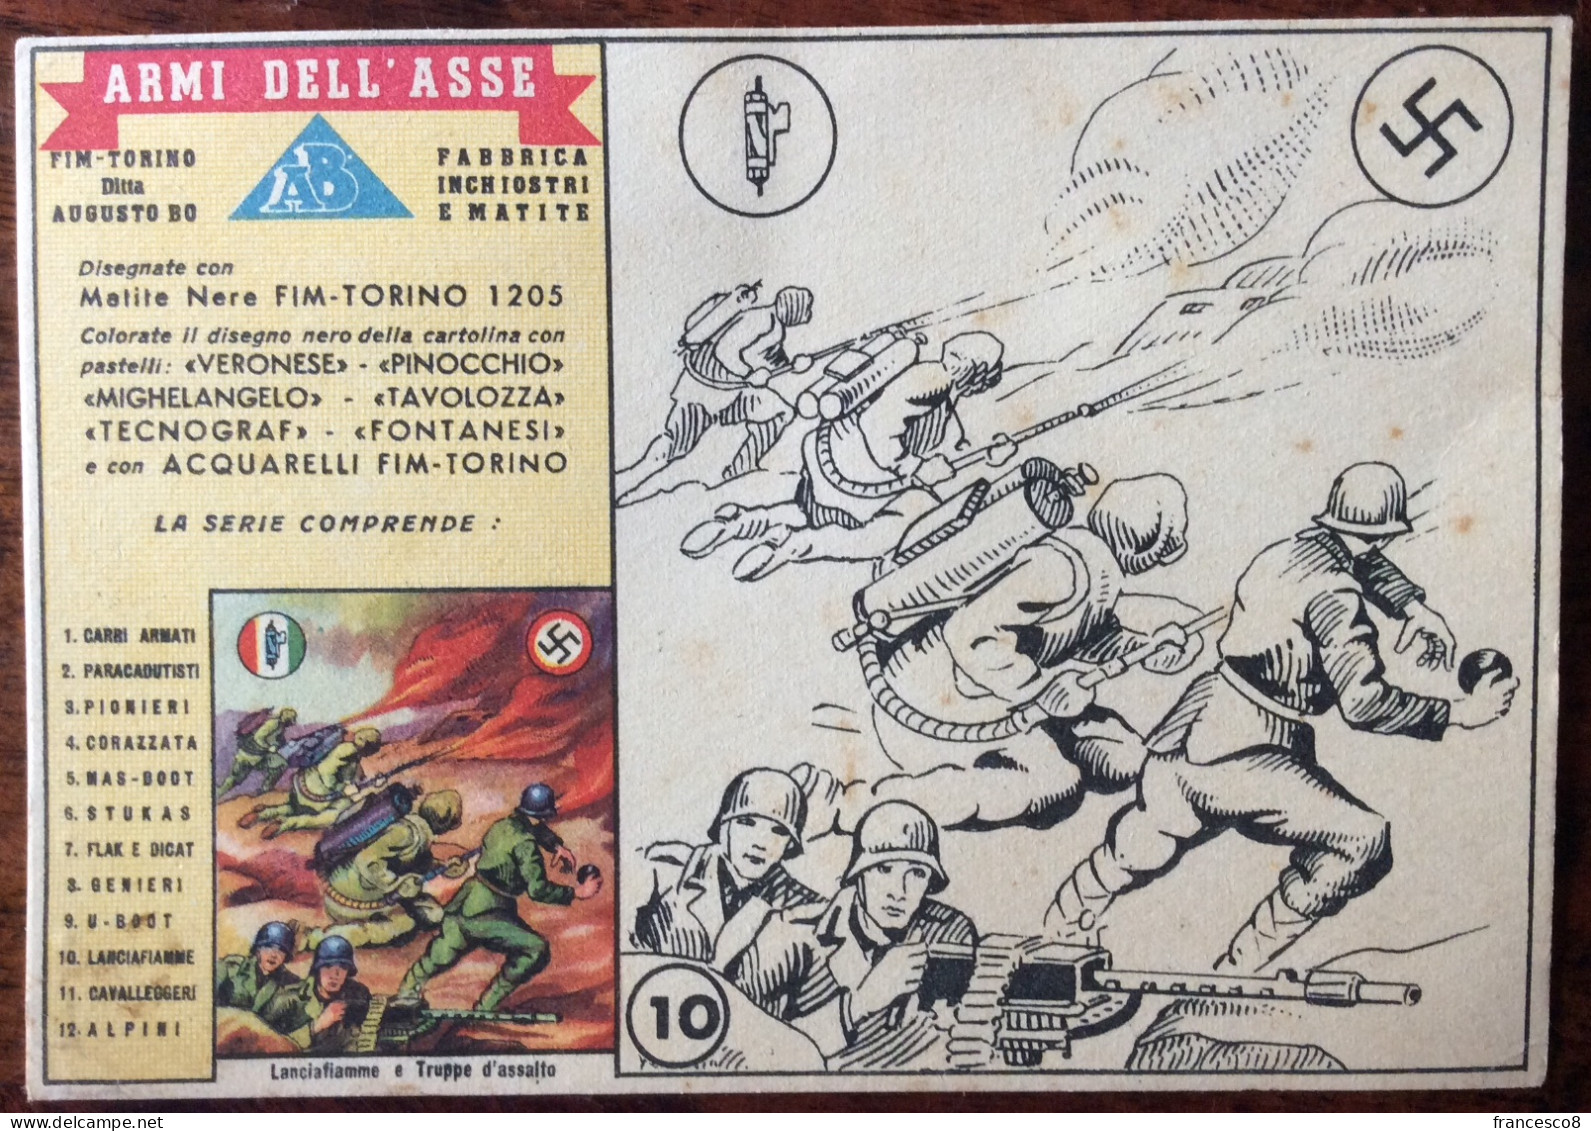 ARMI DELL'ASSE LANCIAFIAMME E TRUPPE D'ASSALTO / Fascismo - War 1939-45